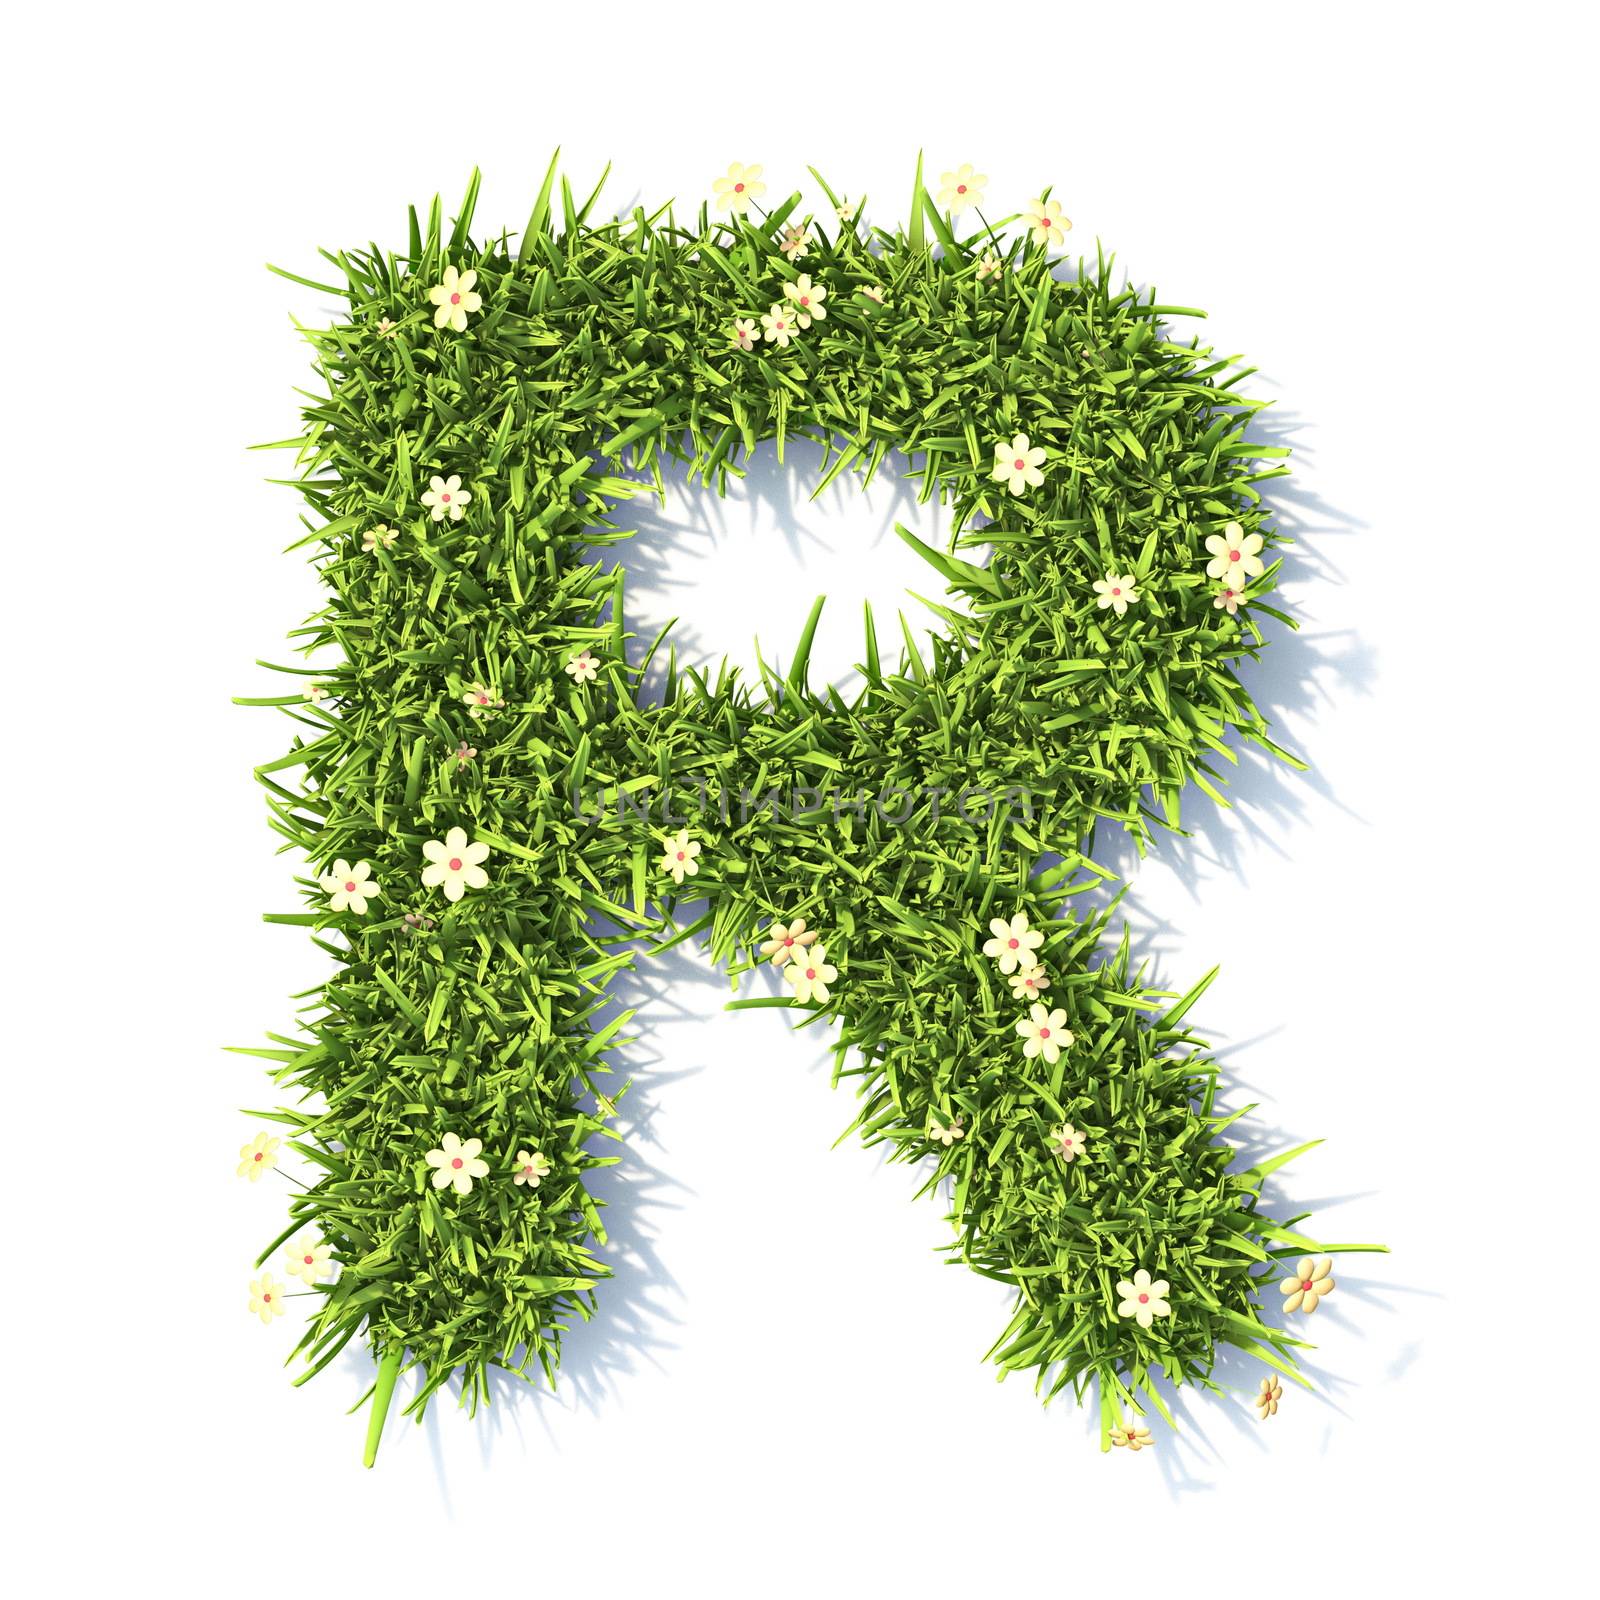 Grass font Letter R 3D rendering illustration isolated on white background